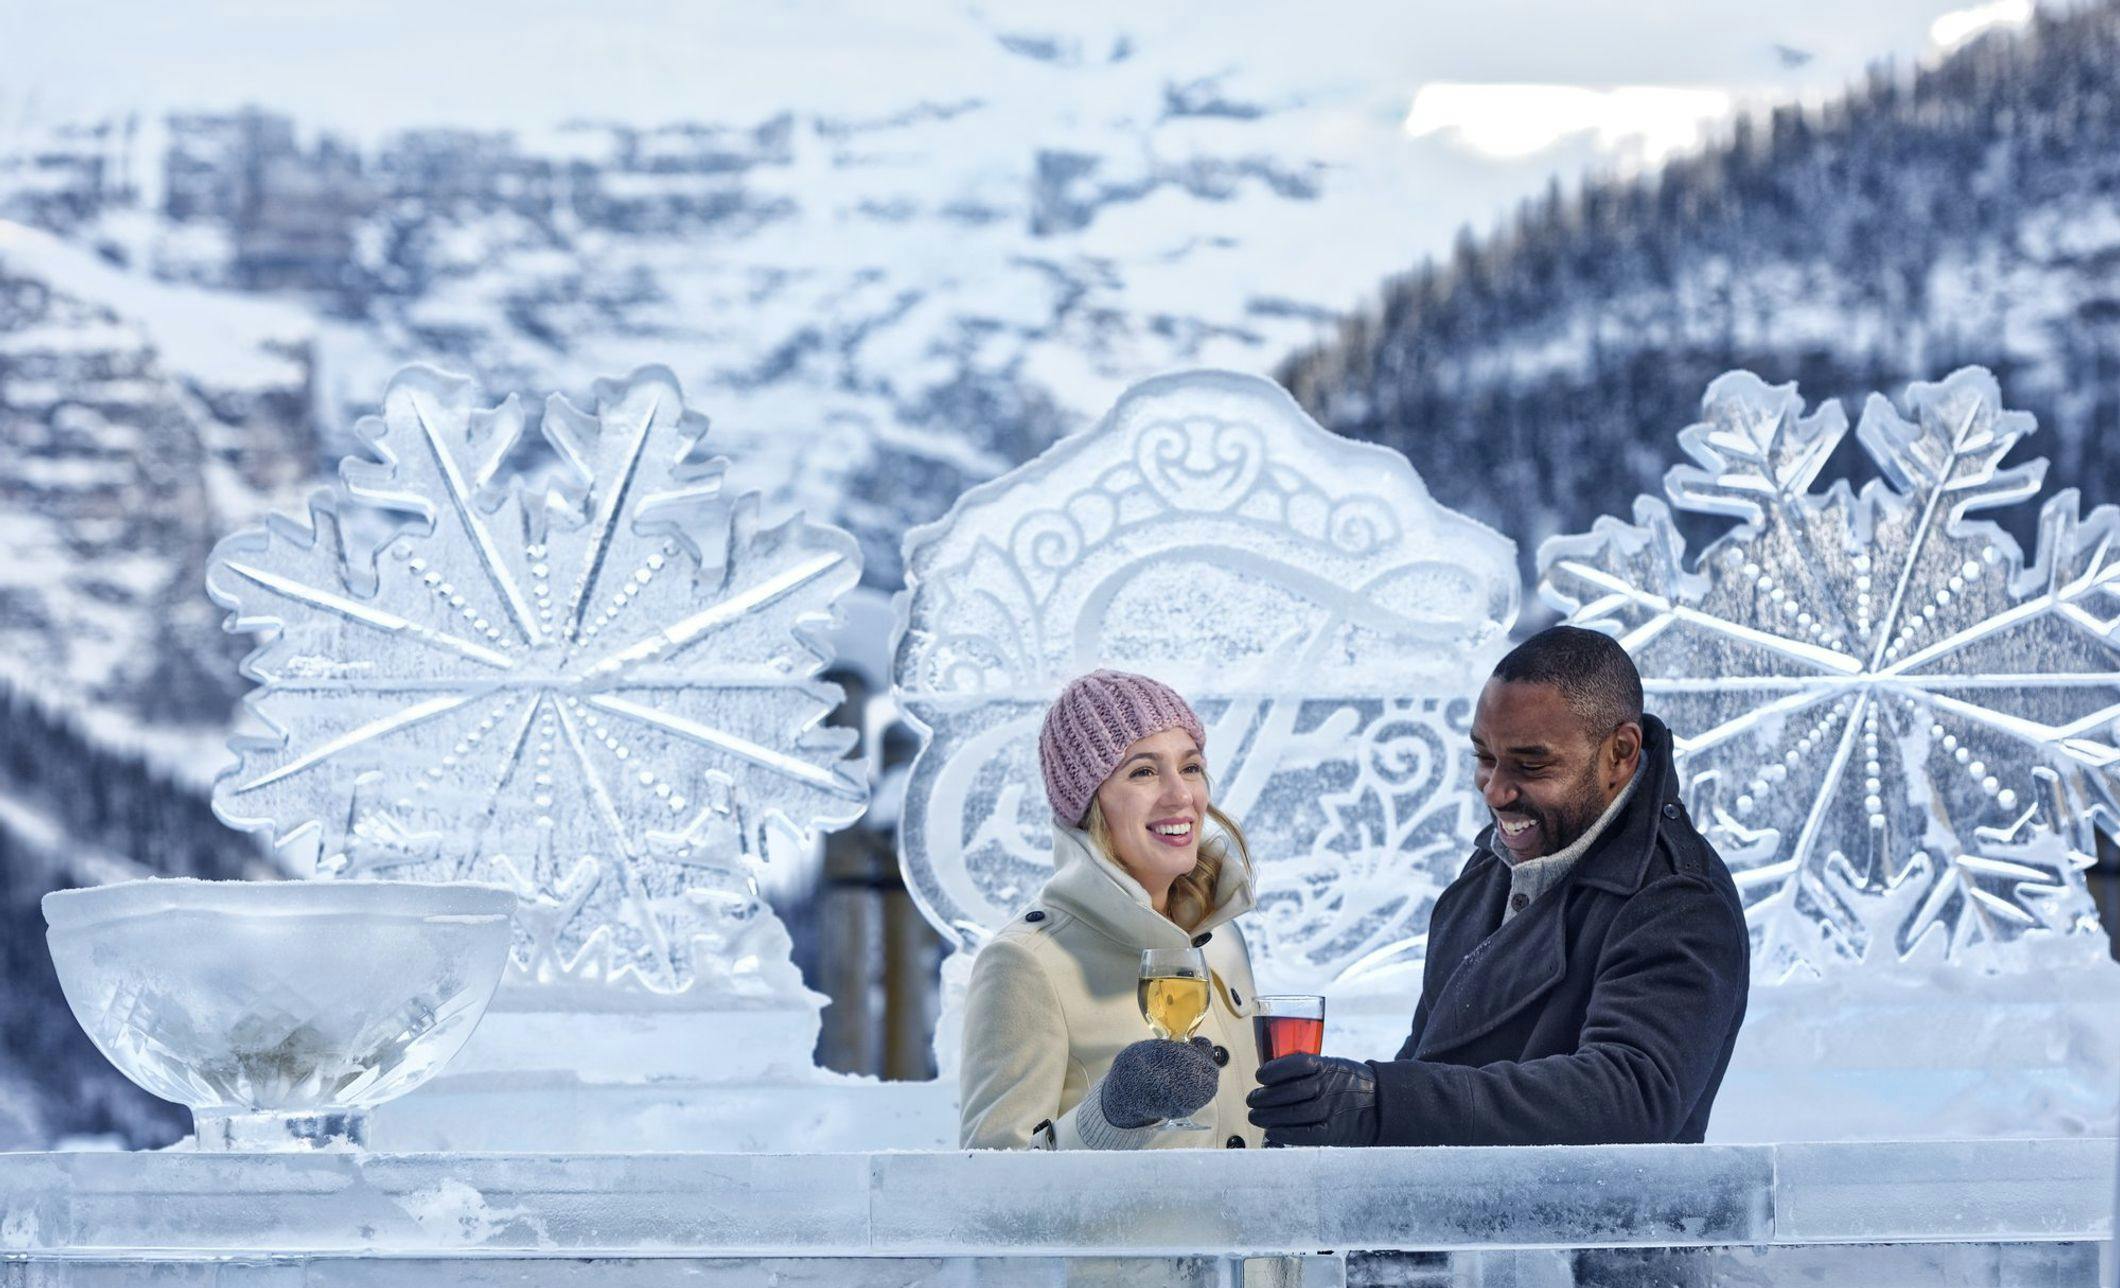 A couple enjoying a drink at an ice bar against a snowy backdrop